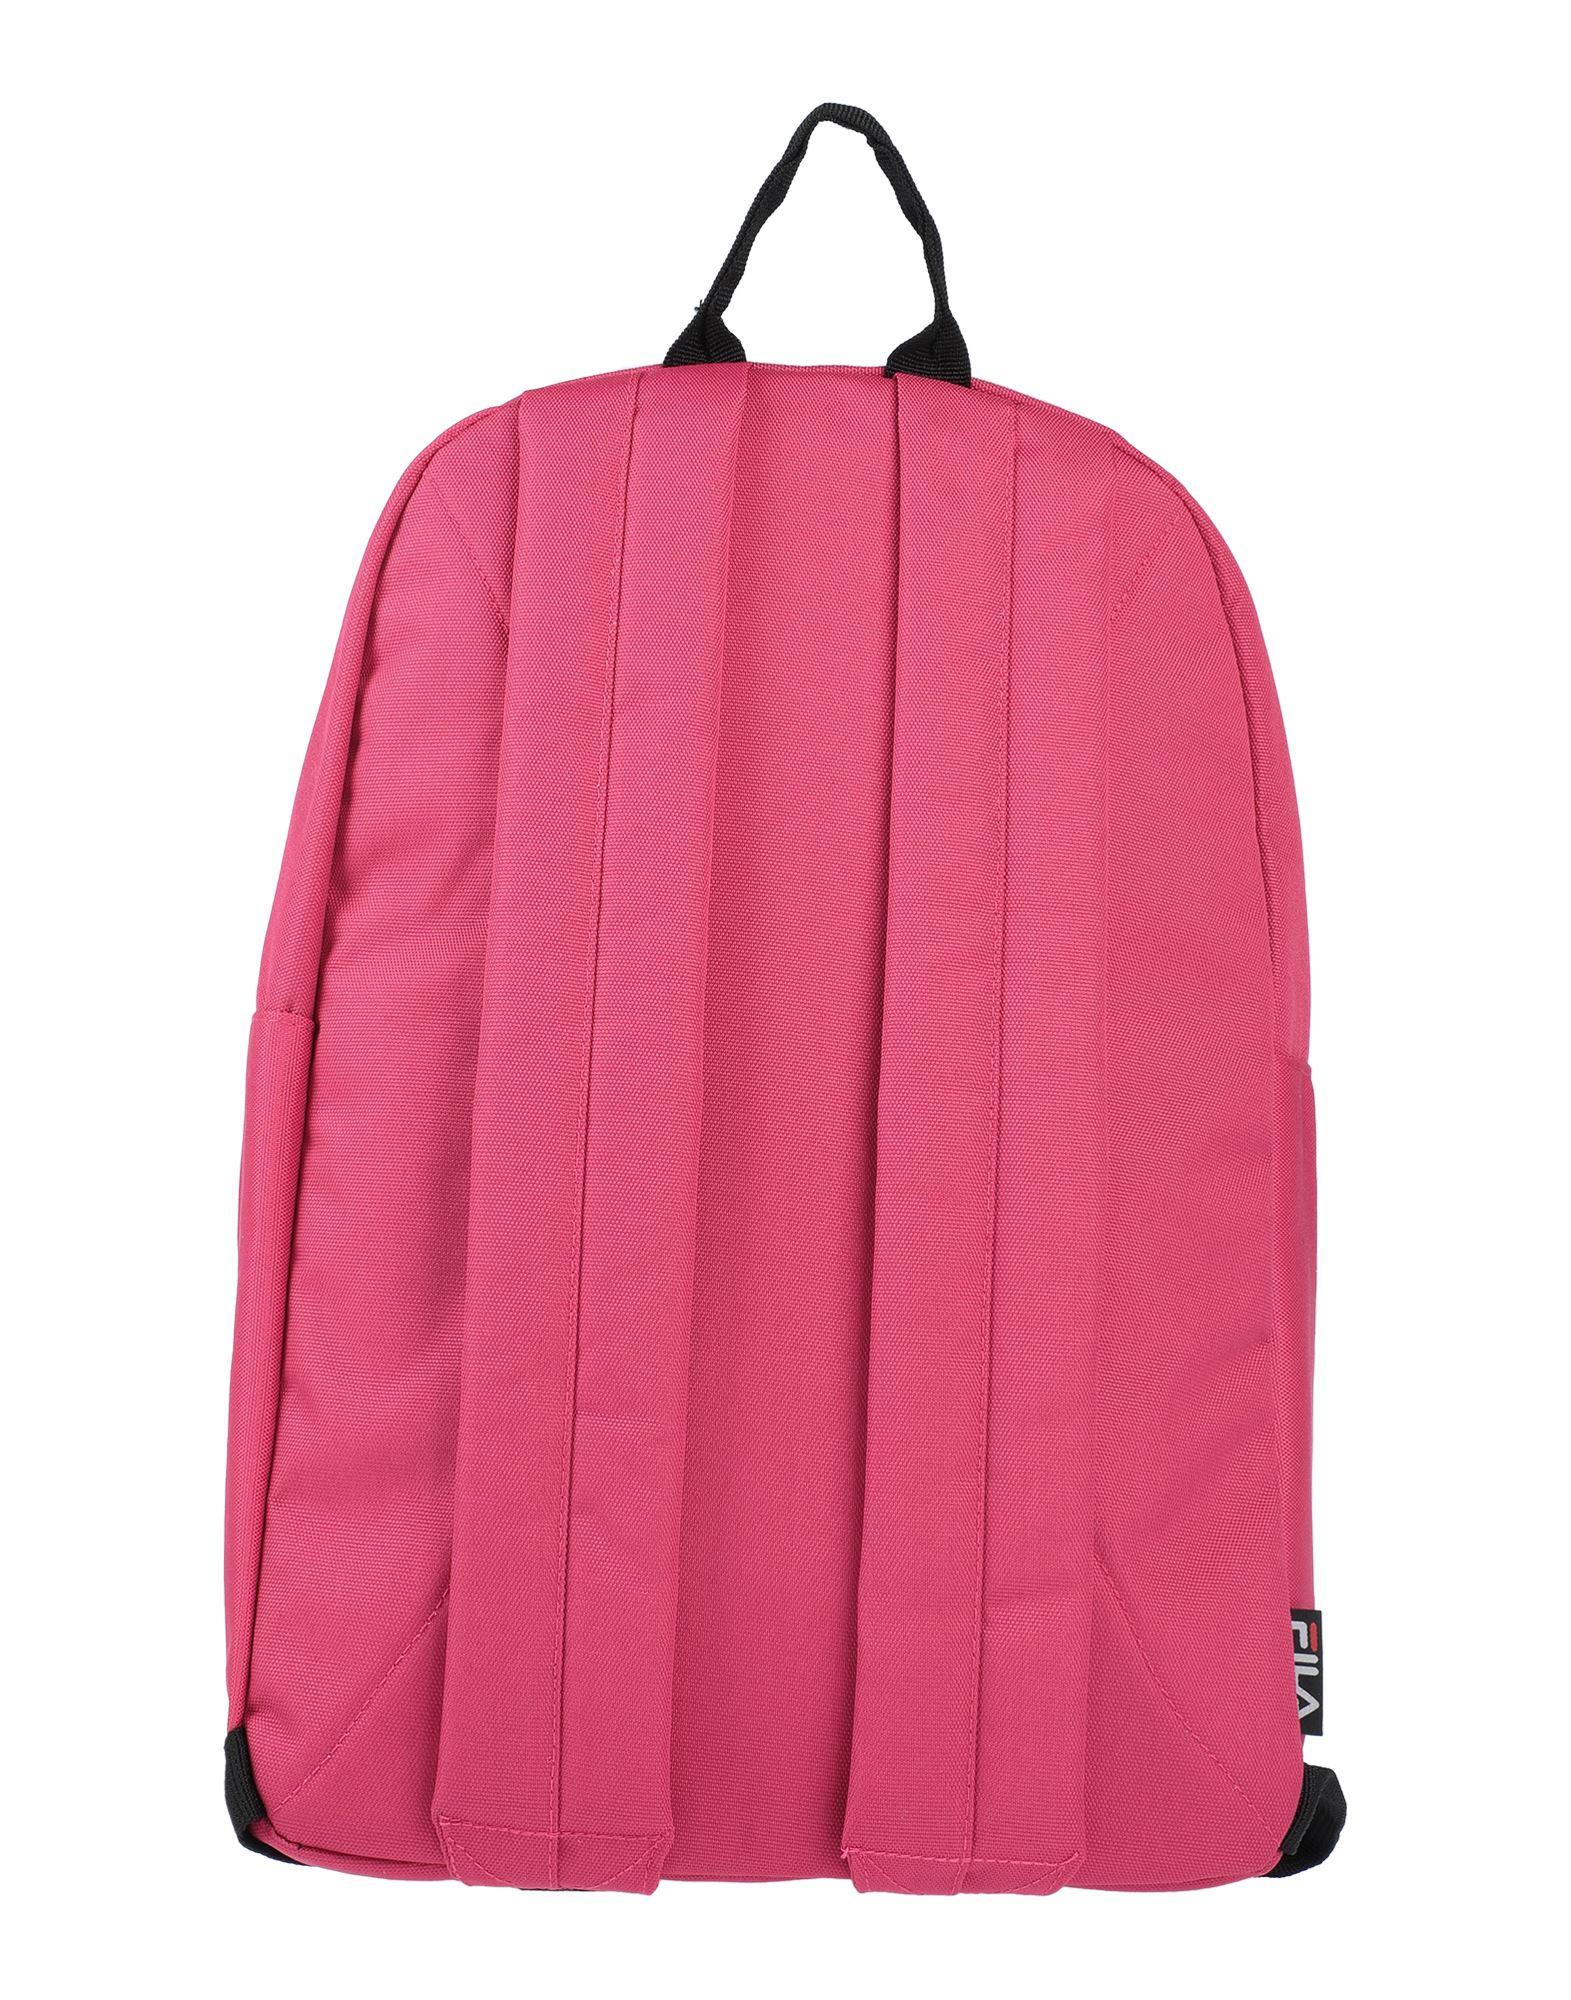 Fila Synthetic Backpacks & Bum Bags in Garnet (Pink) - Lyst